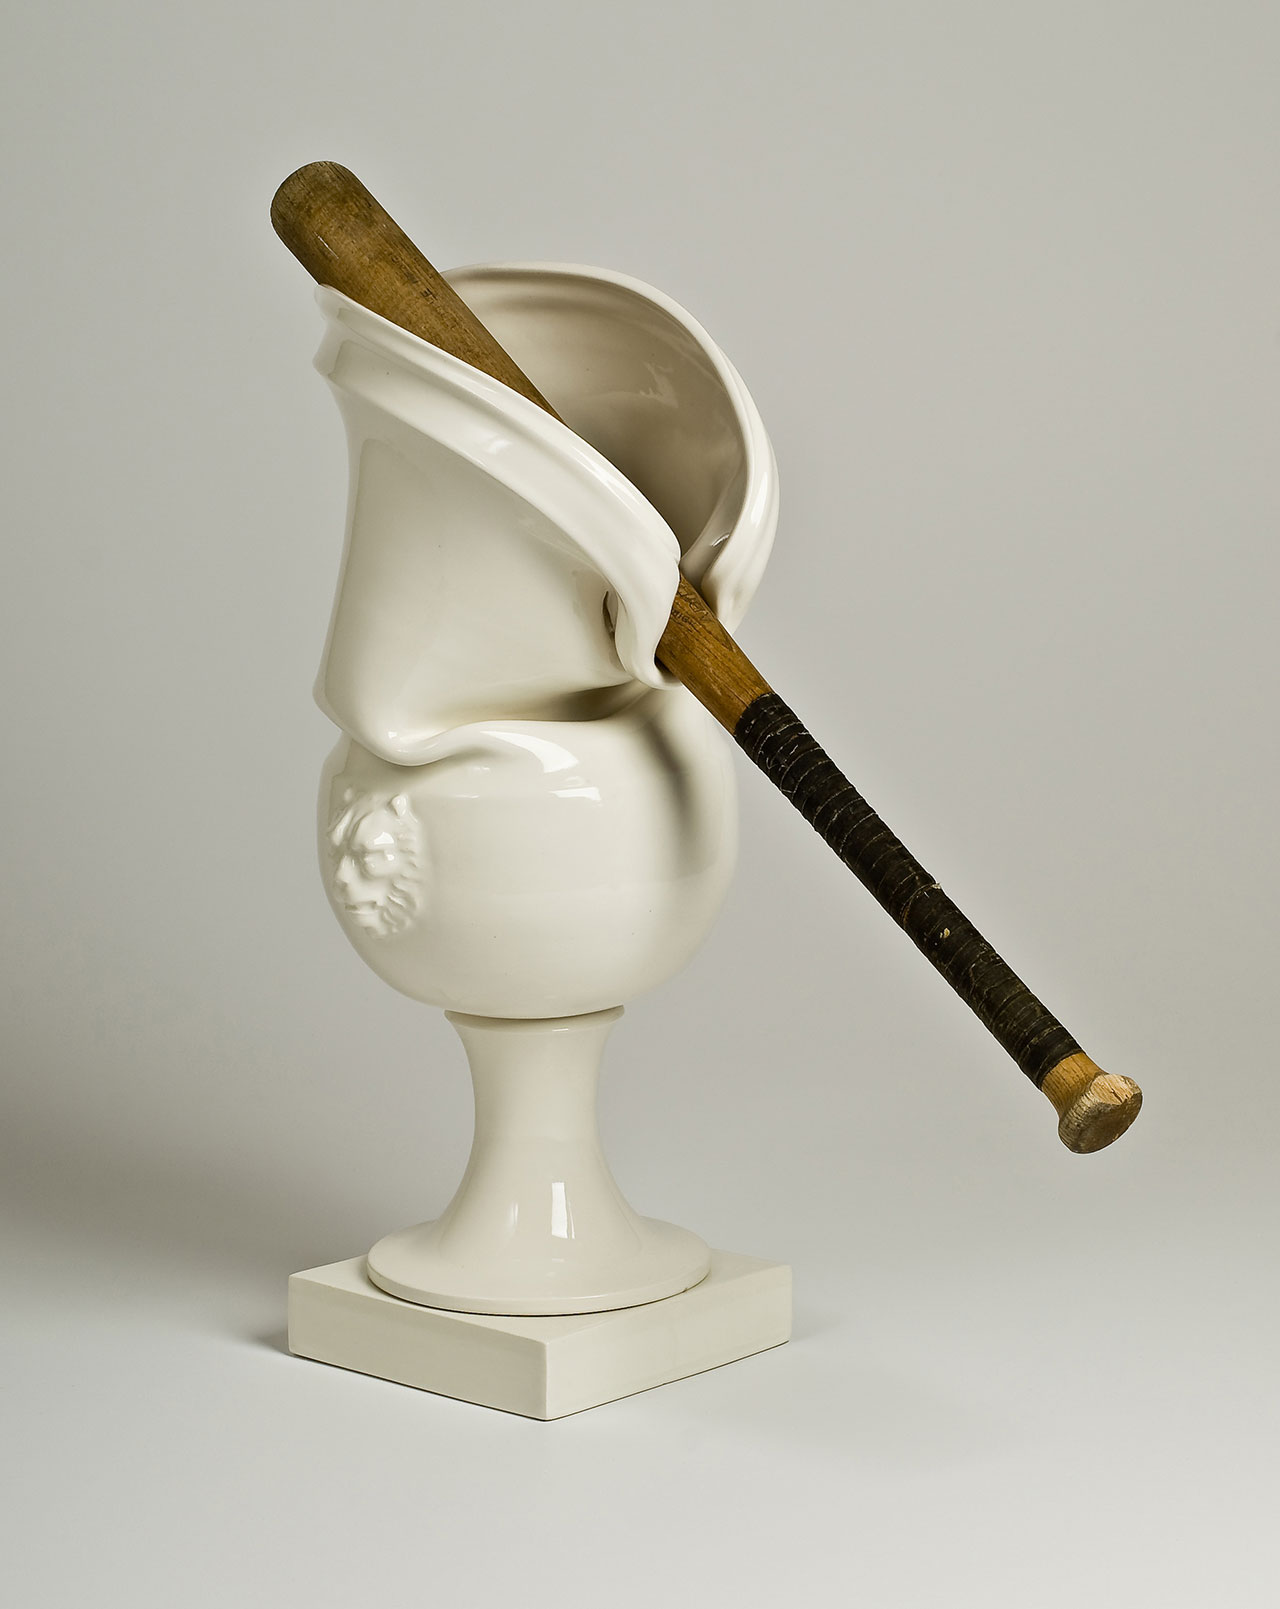 Craste Laurent, Iconocraste au bat I, 2010. Porcelain, glaze, baseball bat. 63.5 x 27.1 x 63.5 cm. Claridge Collection.